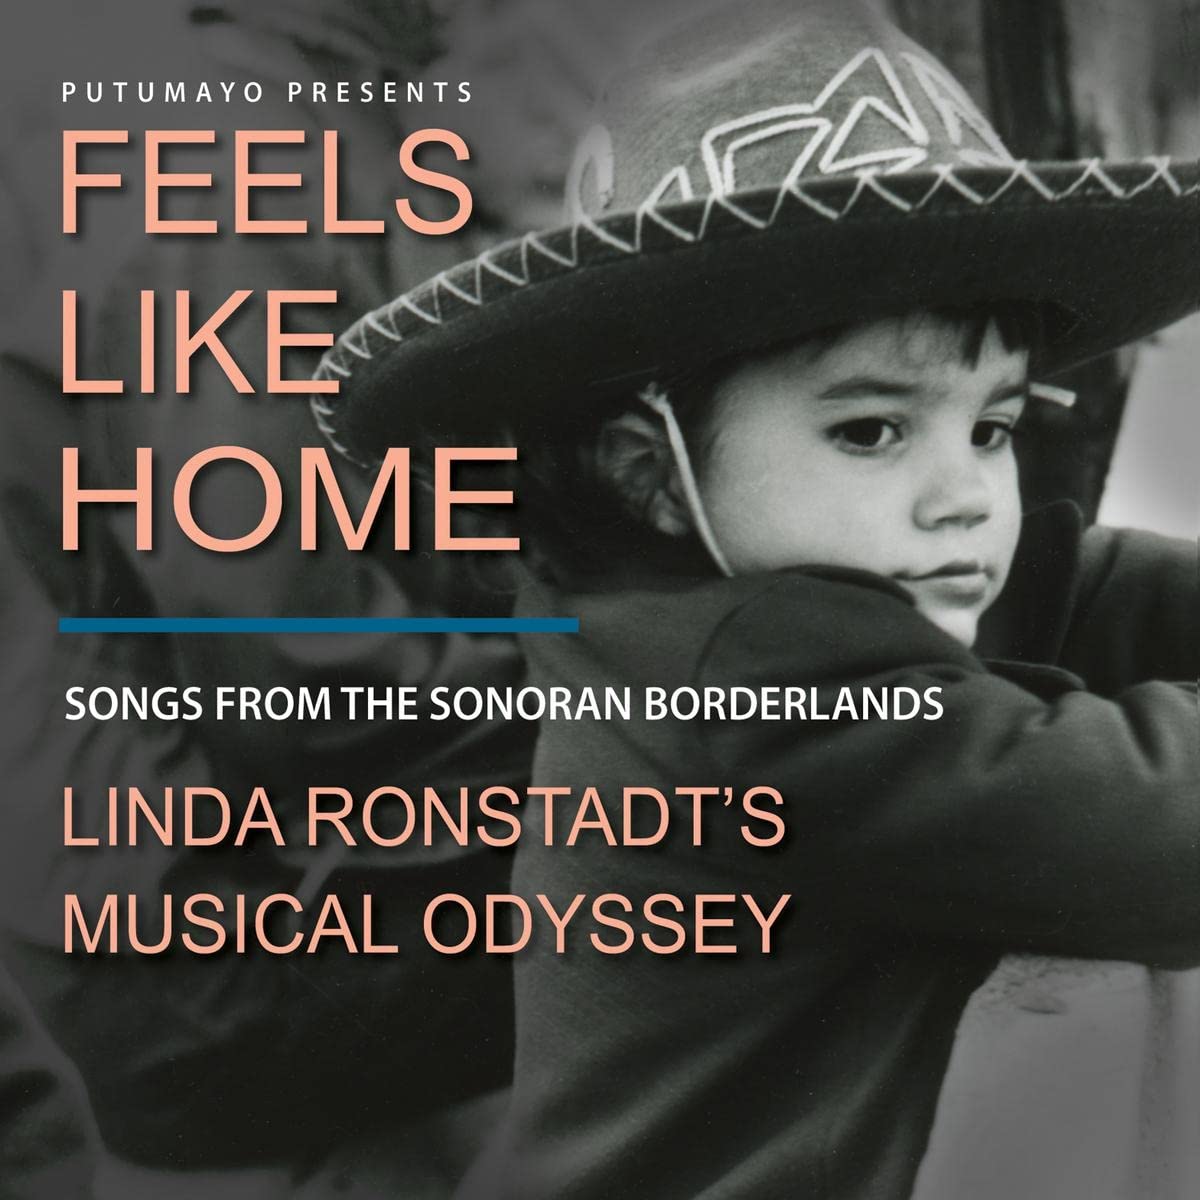 FEELS LIKE HOME: LINDA RONSTADT’S MUSICAL ODYSSEY on MovieShack